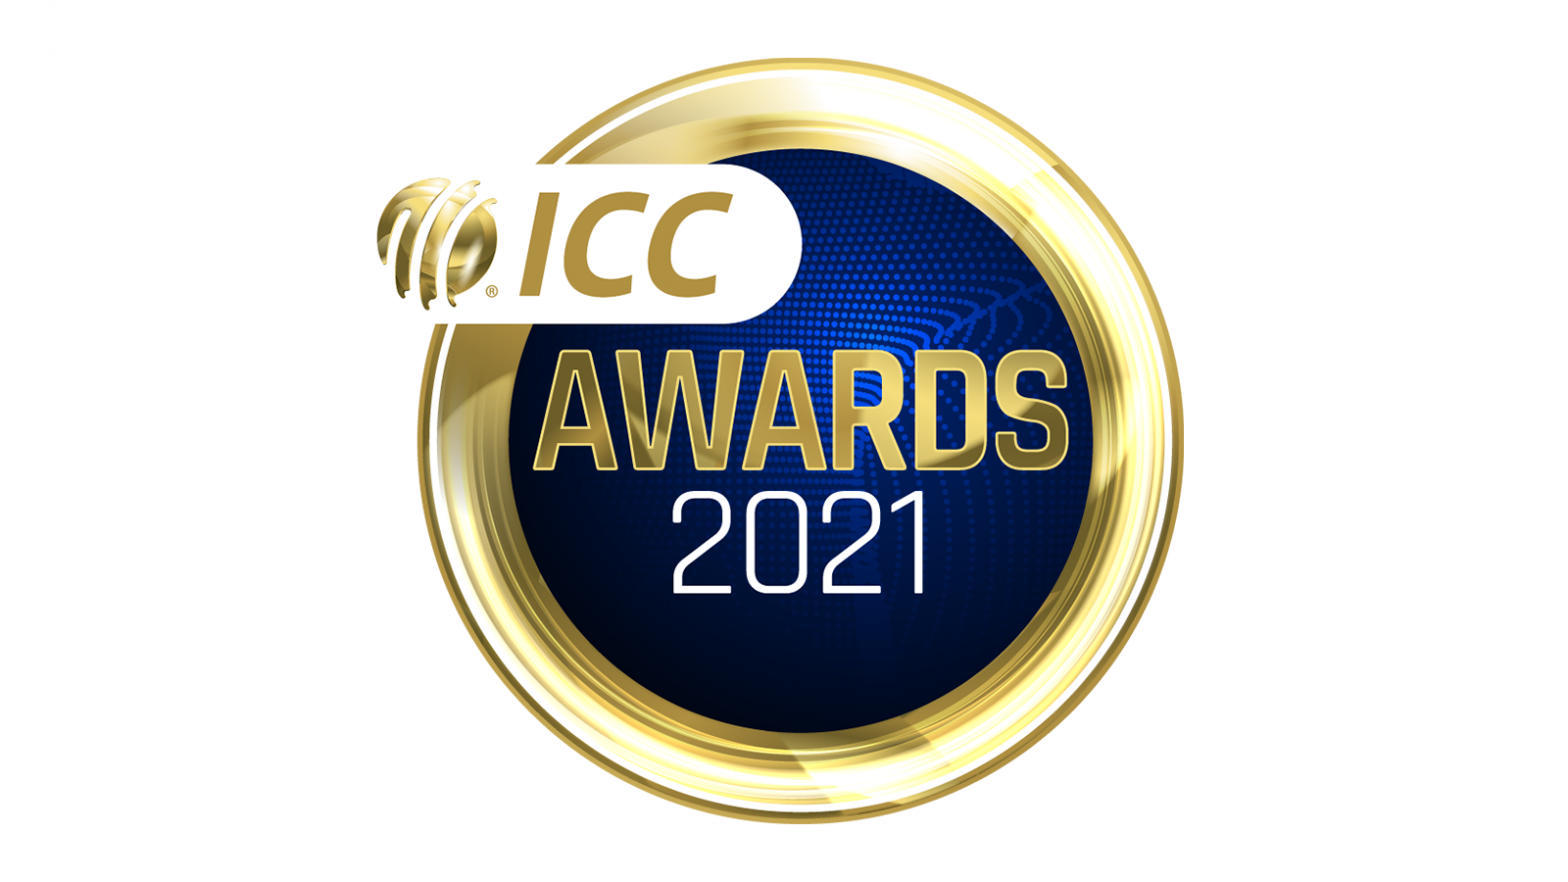 International Cricket Council announced ICC Awards 2021